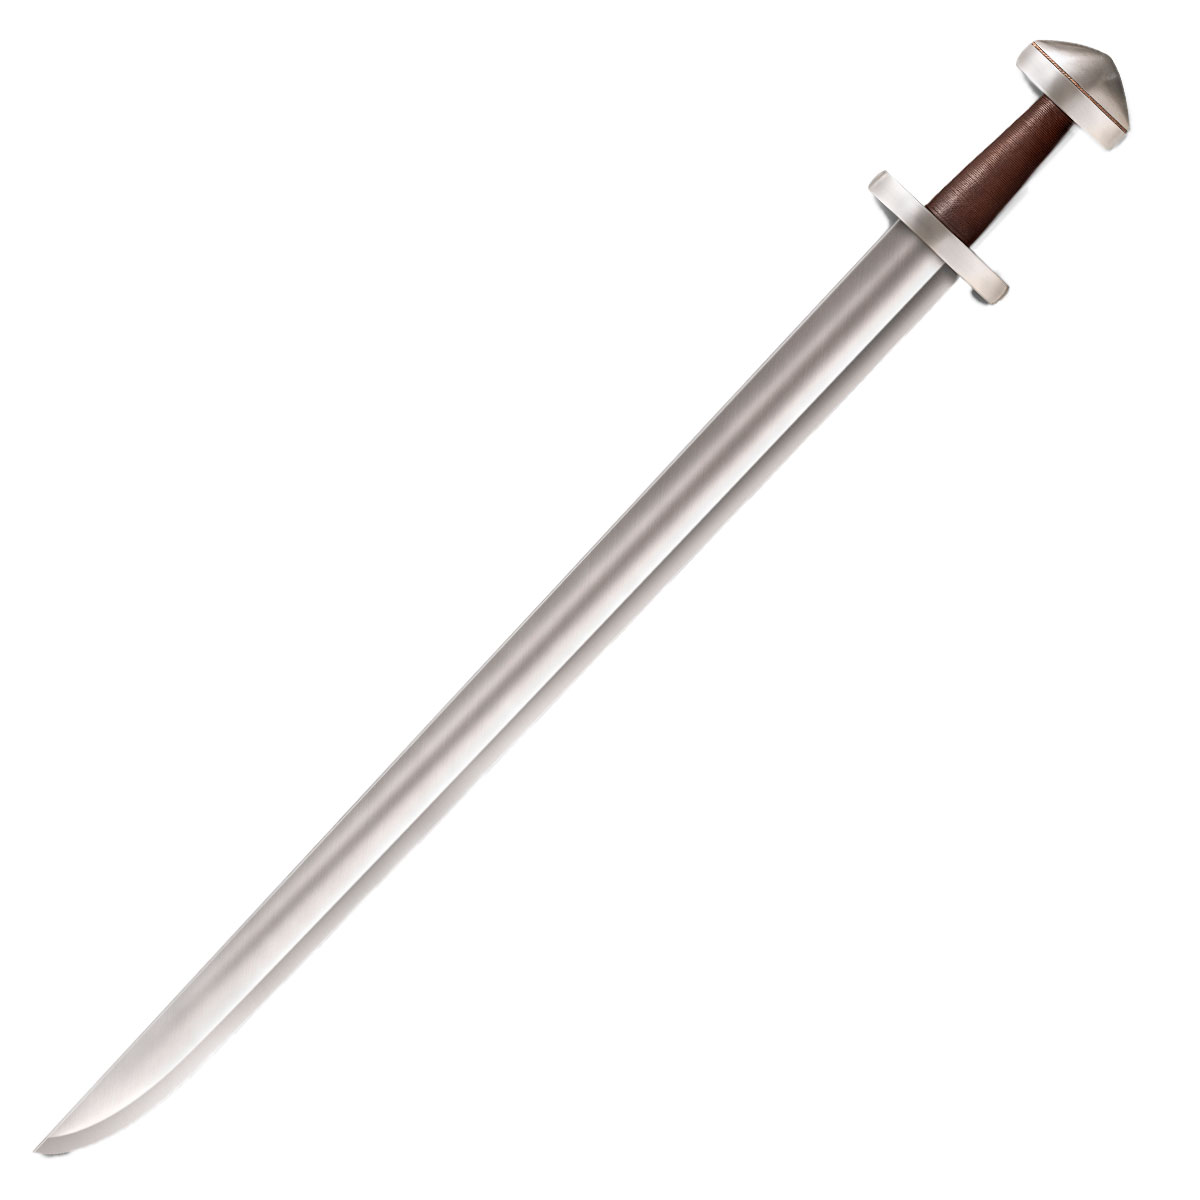 Viking Sword, single edged blade